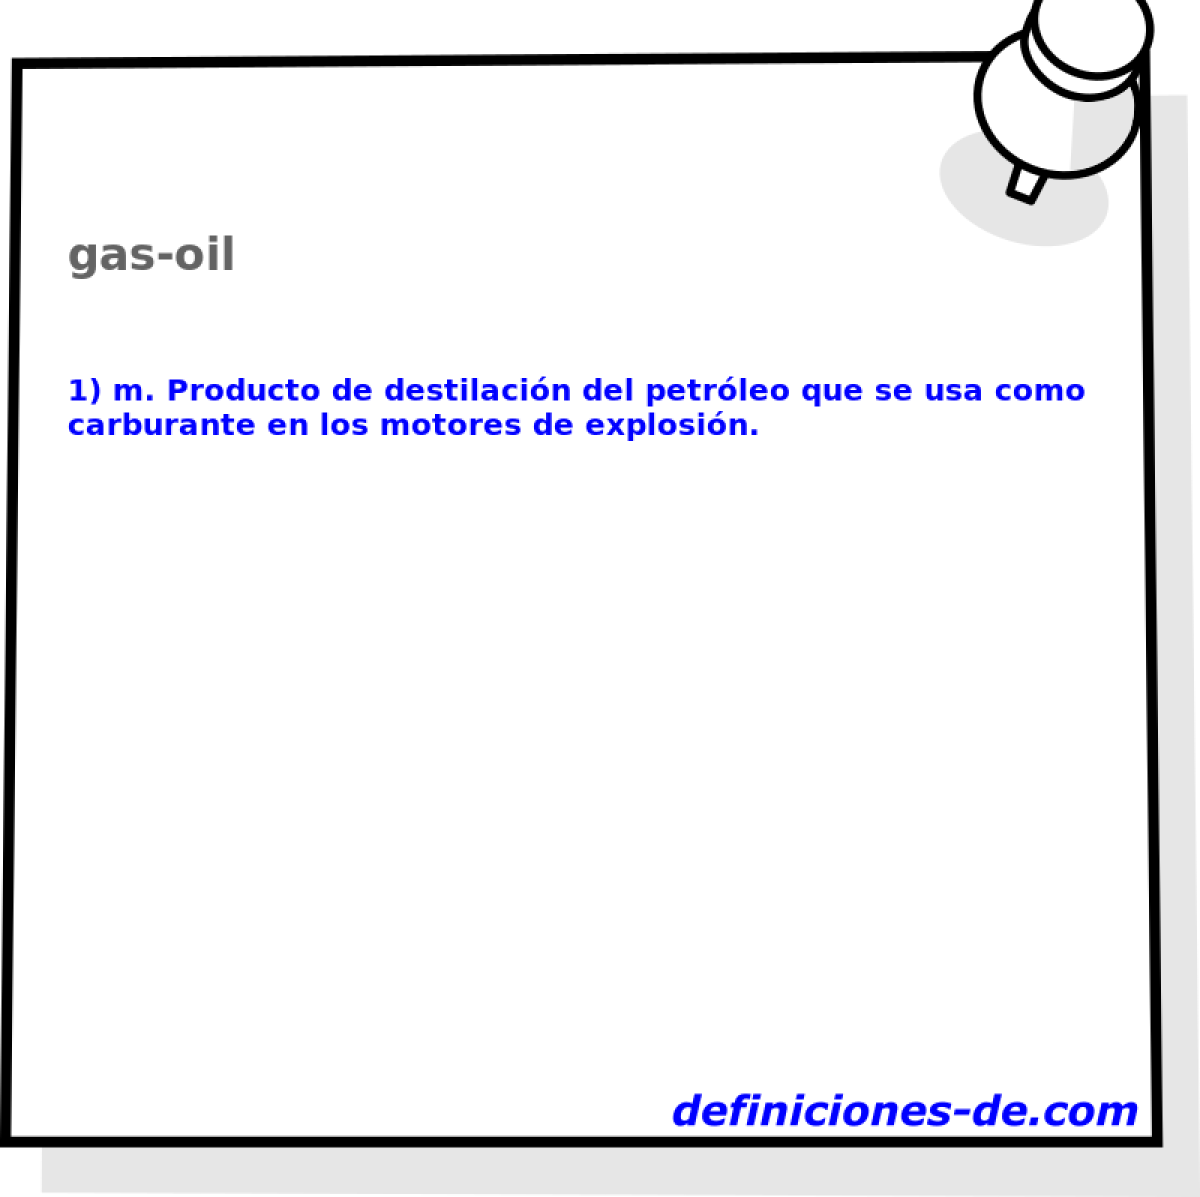 gas-oil 